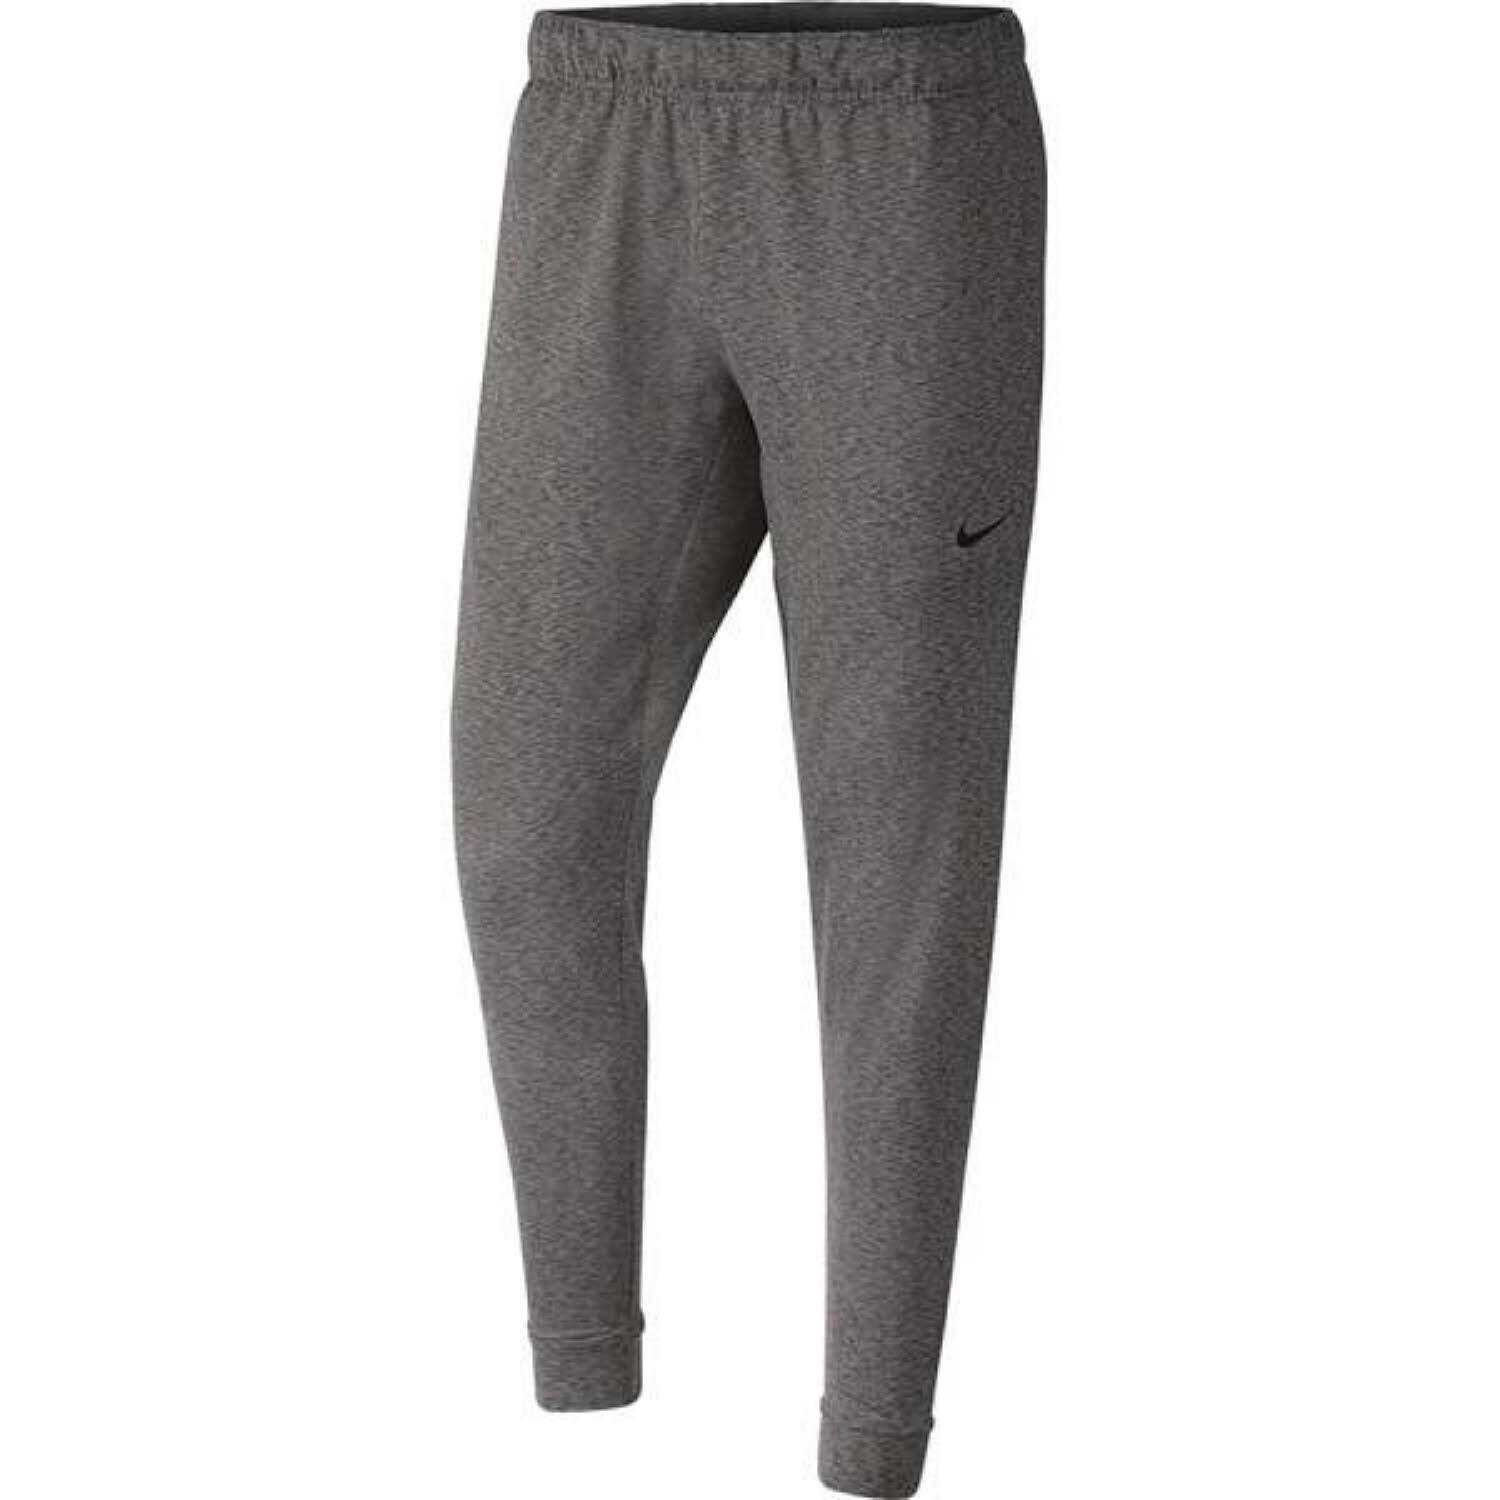 Брюки спортивные Nike Hyper Dry LT, серый спортивные брюки защитного цвета 23025 серый 128